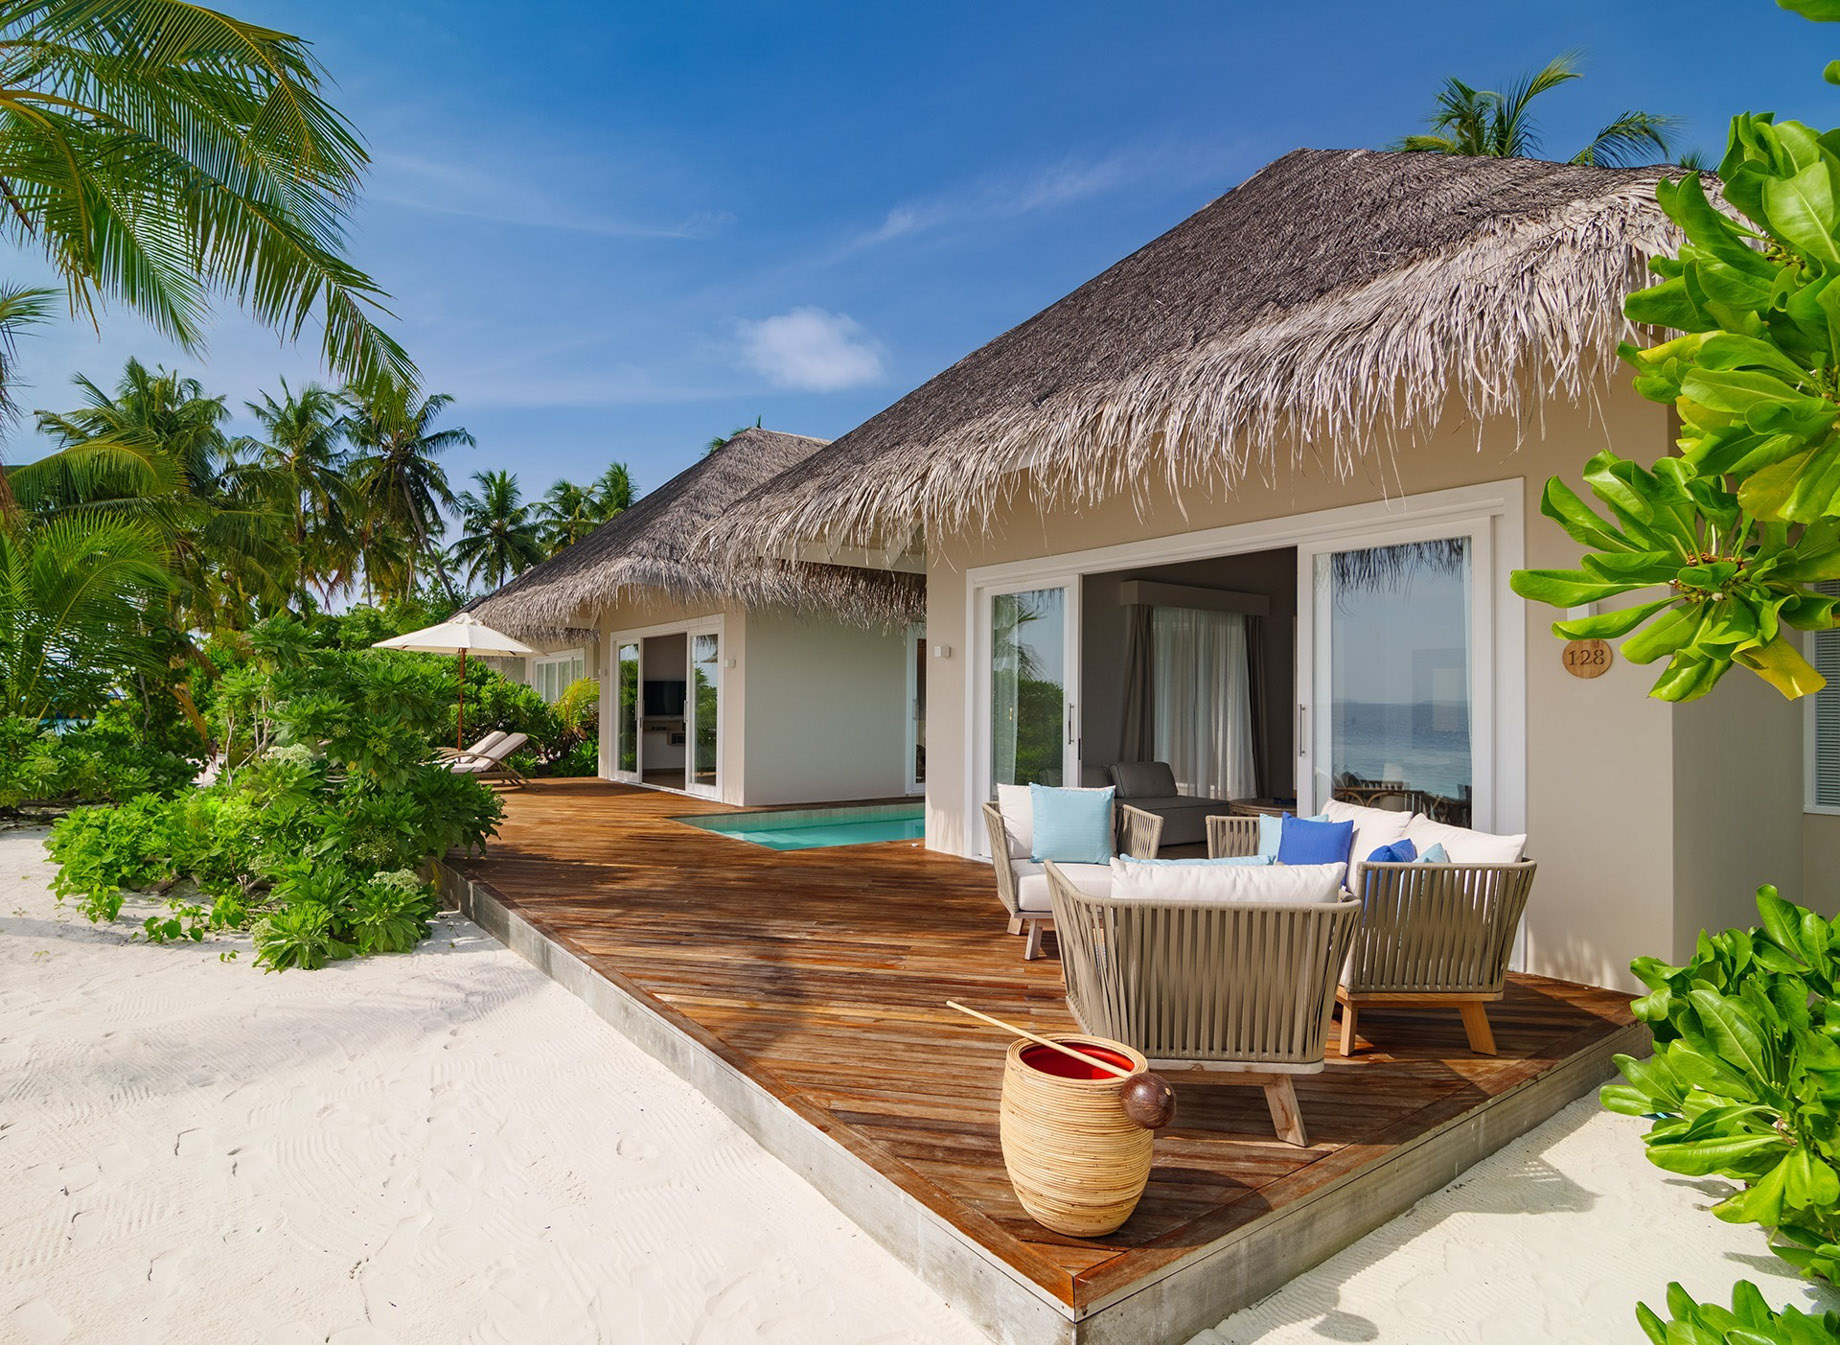 Baglioni Resort Maldives – Maagau Island, Rinbudhoo, Maldives – Beach Villa Pool Suite Deck